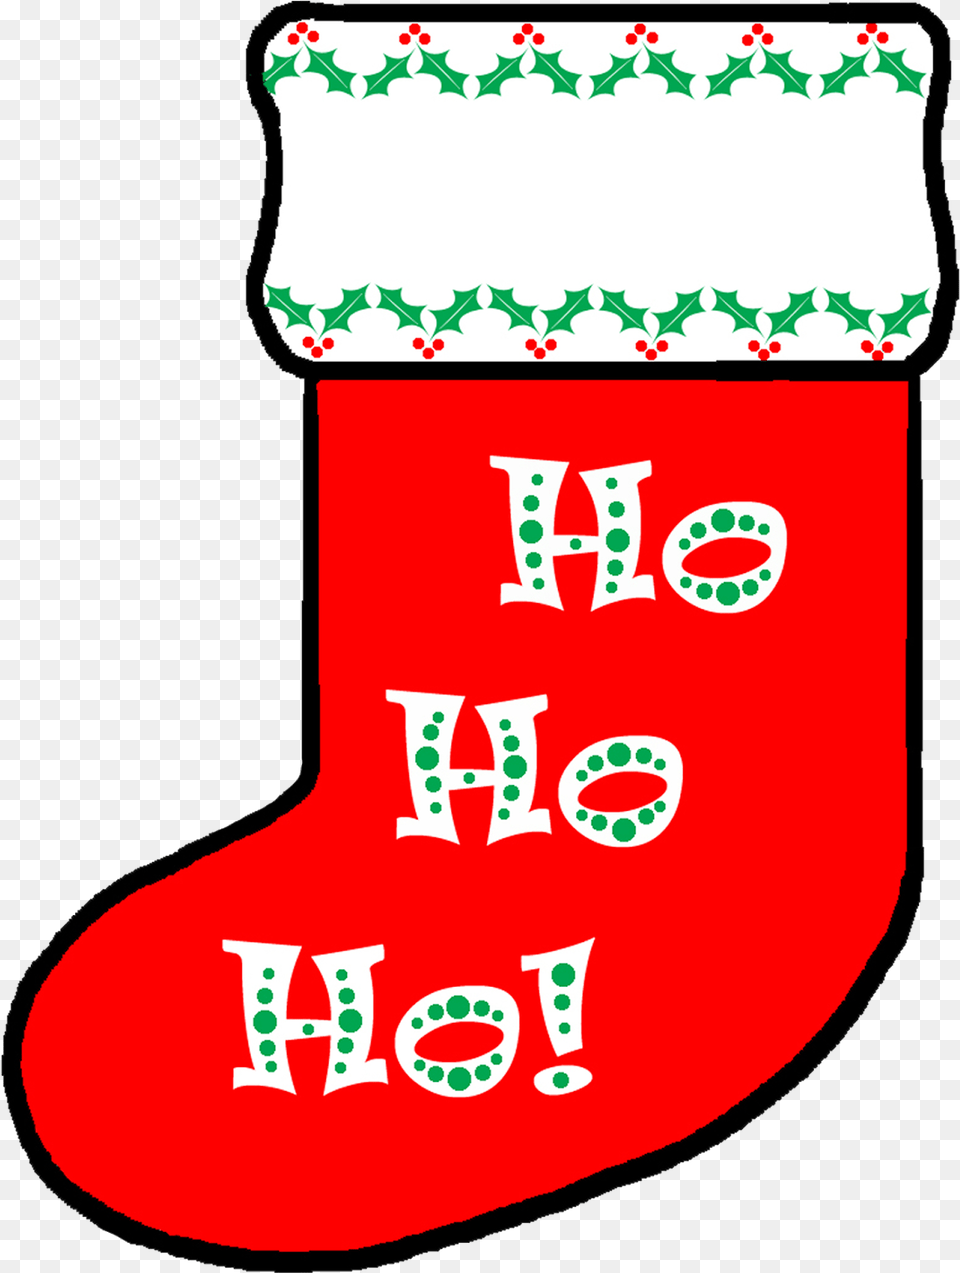 Xmas Wreath Vector Turkey Socks Snowman Shopping Scene Santa Socks Clip Art, Hosiery, Stocking, Clothing, Christmas Decorations Free Transparent Png